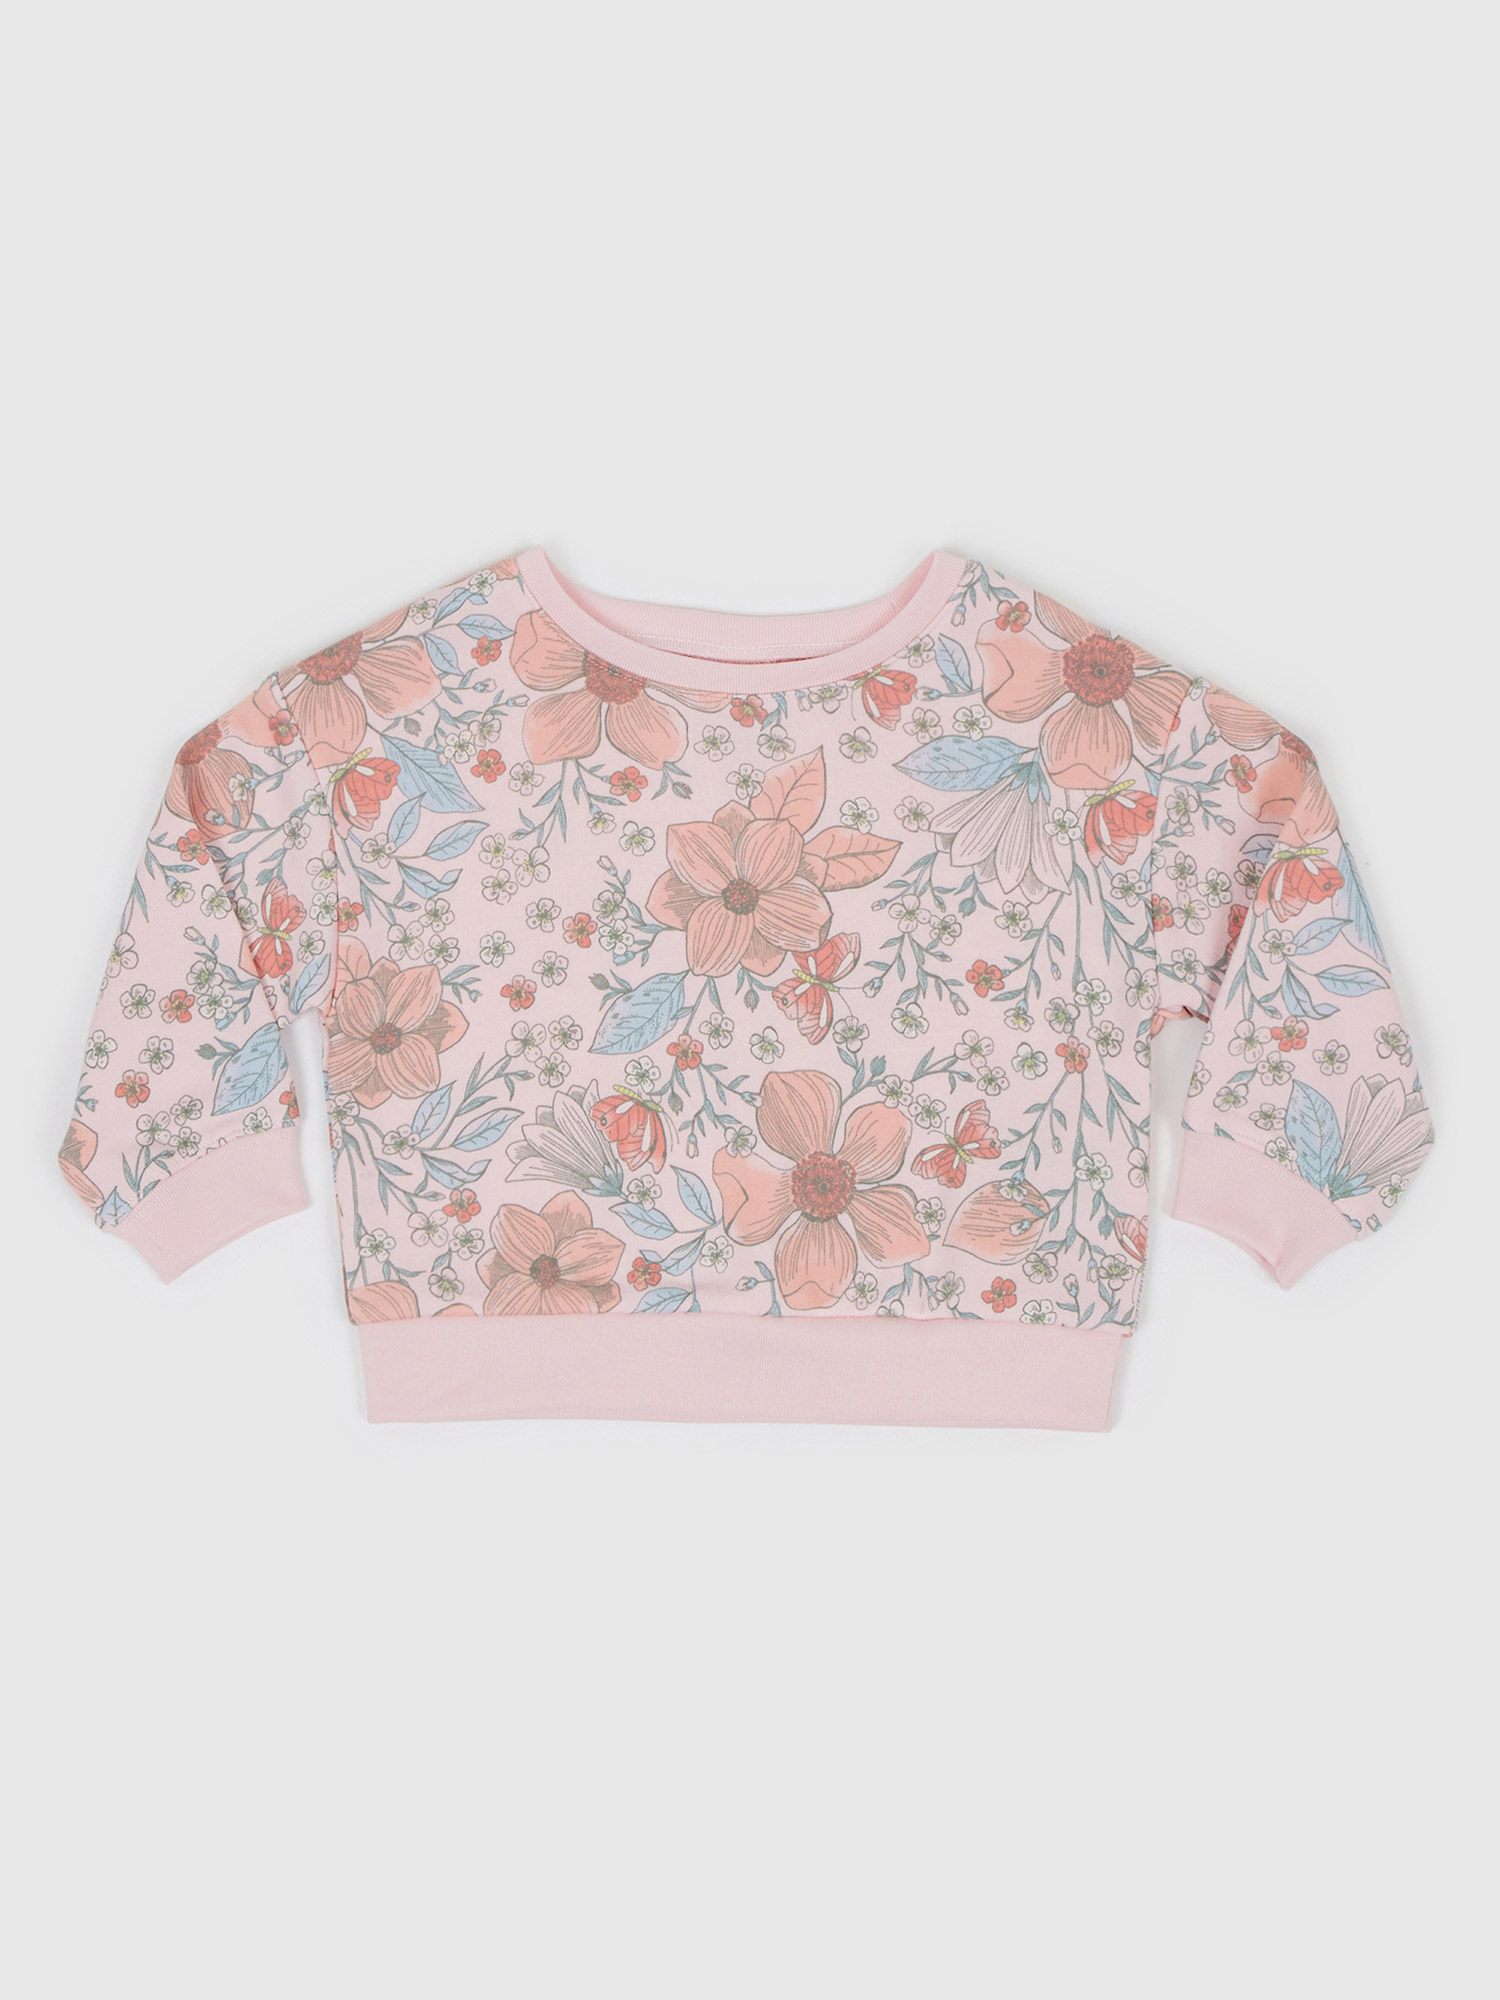 GAP Kids Sweatshirt With Flowers - Girls